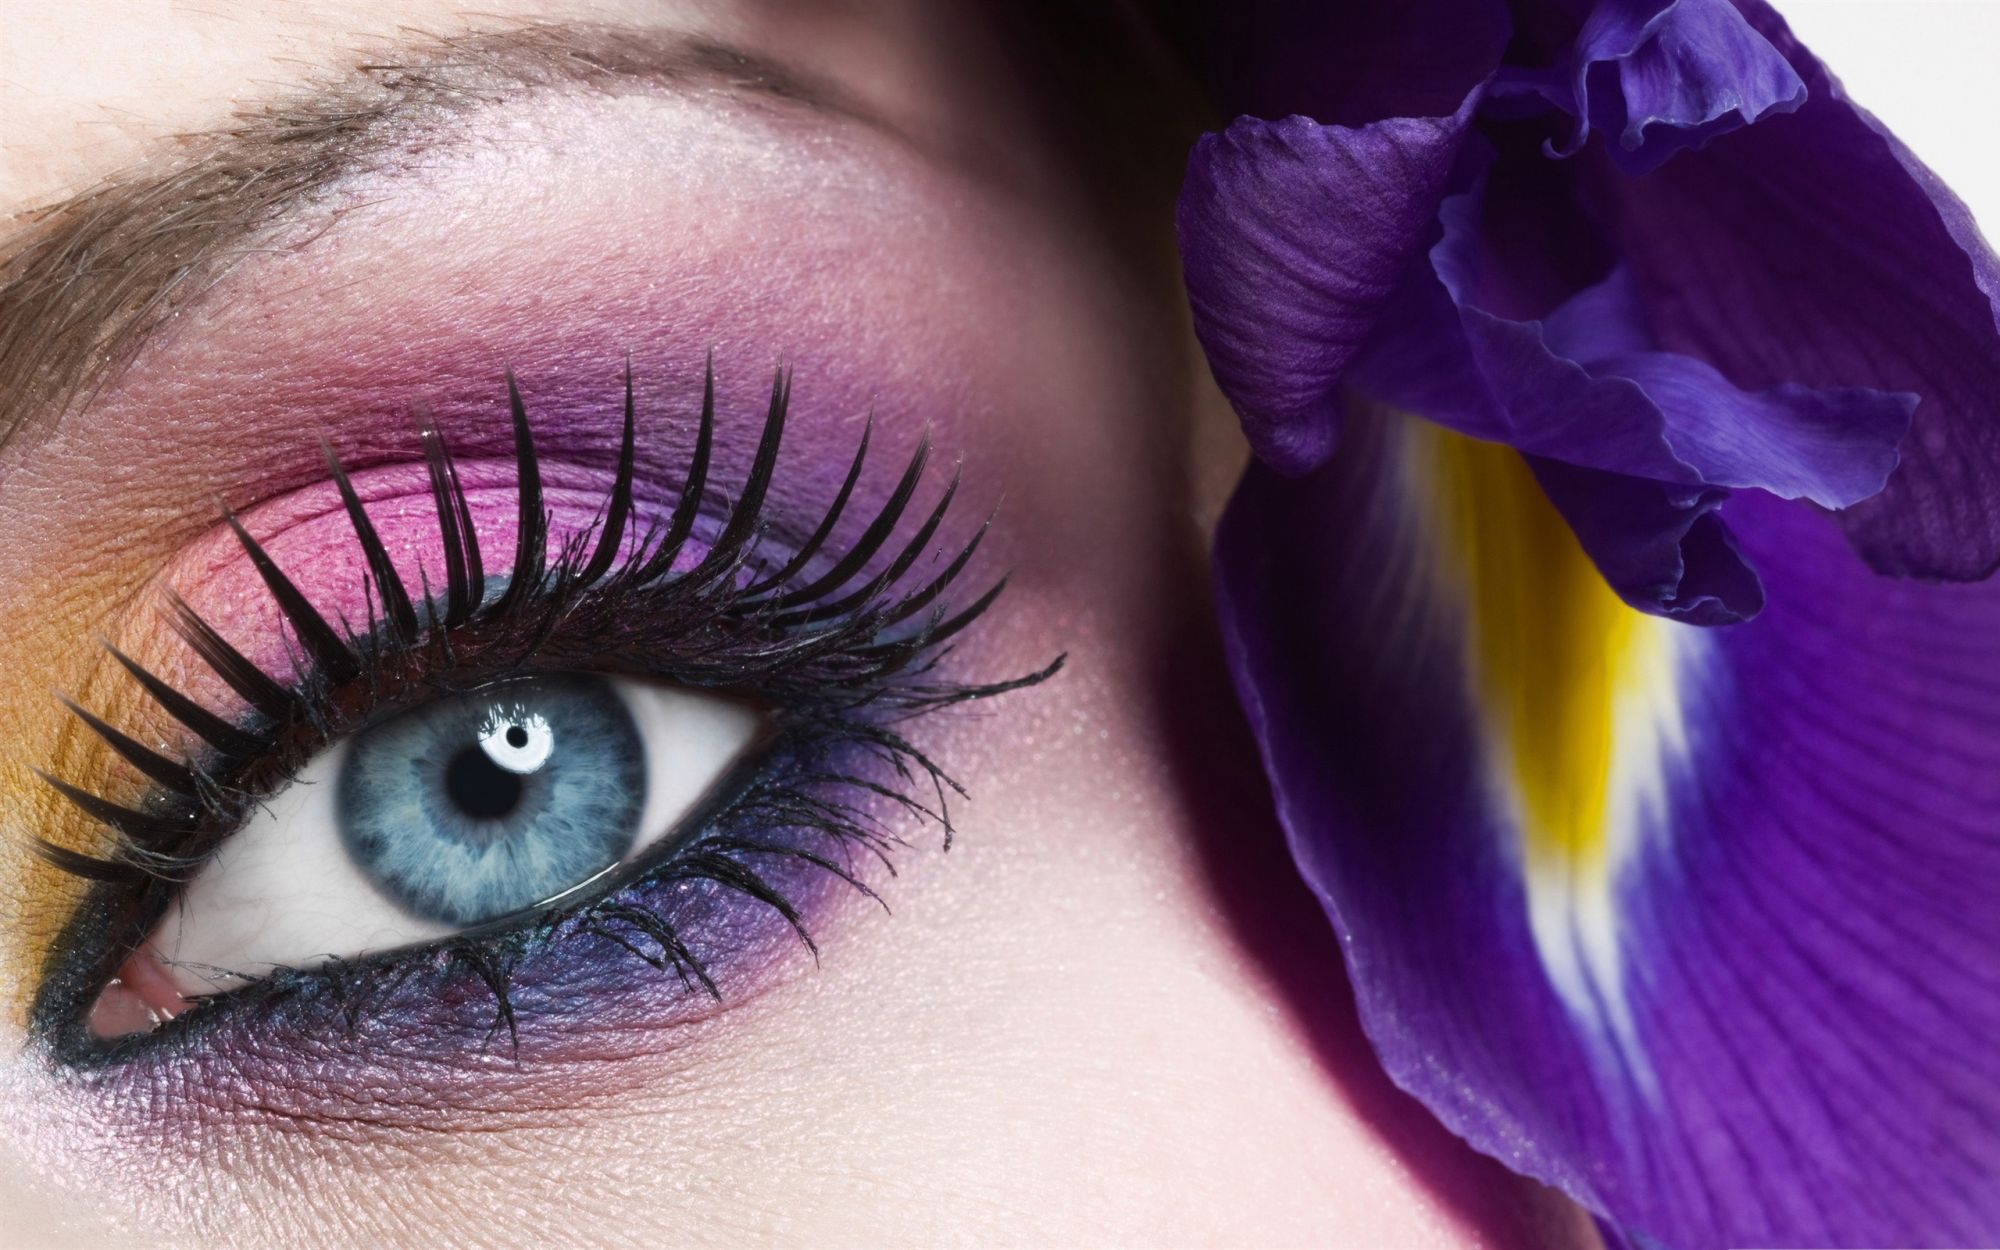 beautiful eye close up-Global Beauty Girl wallpaper selection 2560x1600